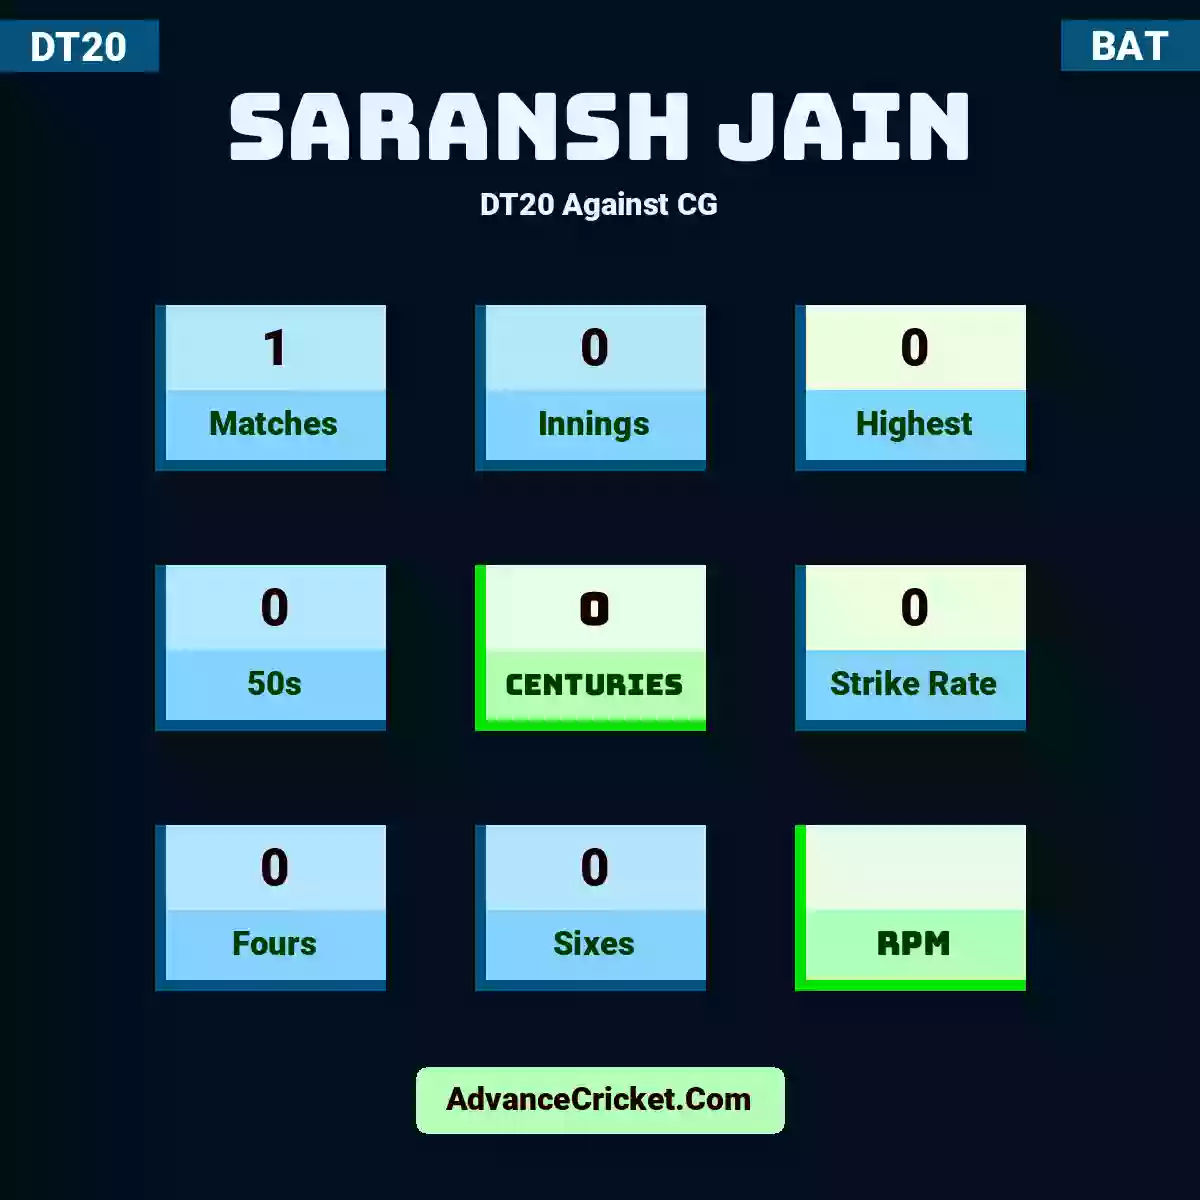 Saransh Jain DT20  Against CG, Saransh Jain played 1 matches, scored 0 runs as highest, 0 half-centuries, and 0 centuries, with a strike rate of 0. S.Jain hit 0 fours and 0 sixes.